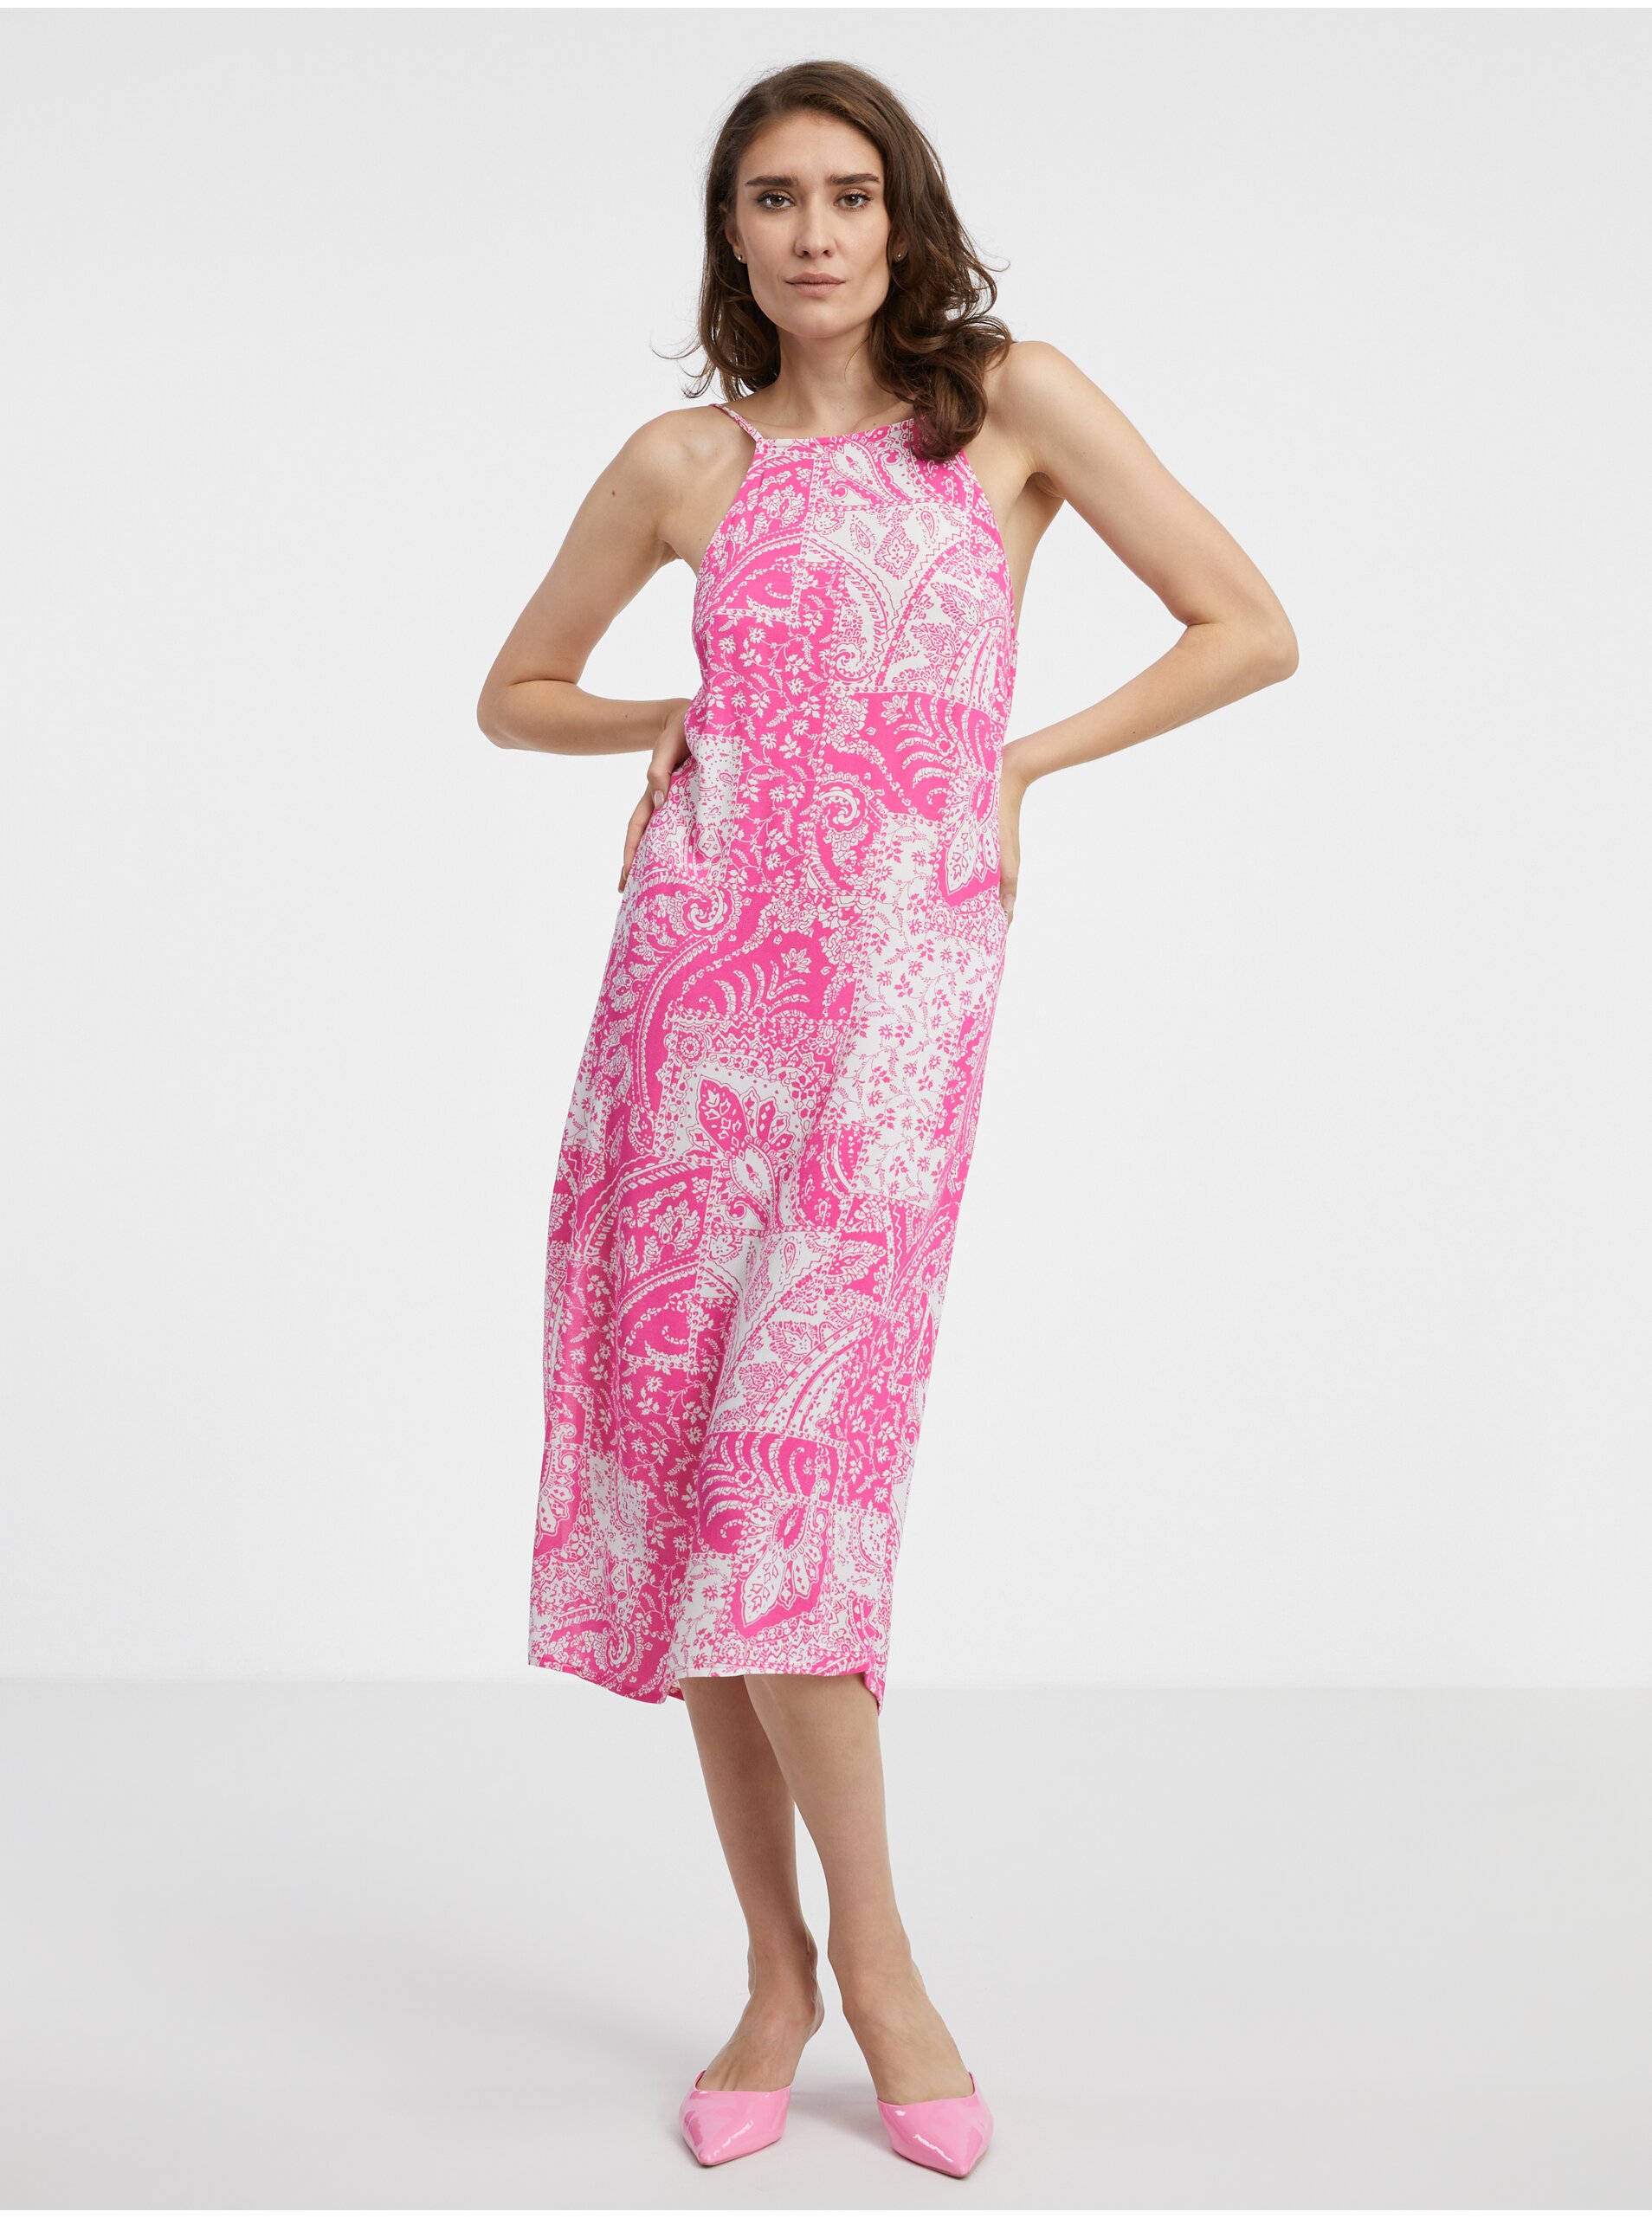 Women's pink patterned summer midi dress VERO MODA Ebba - Women